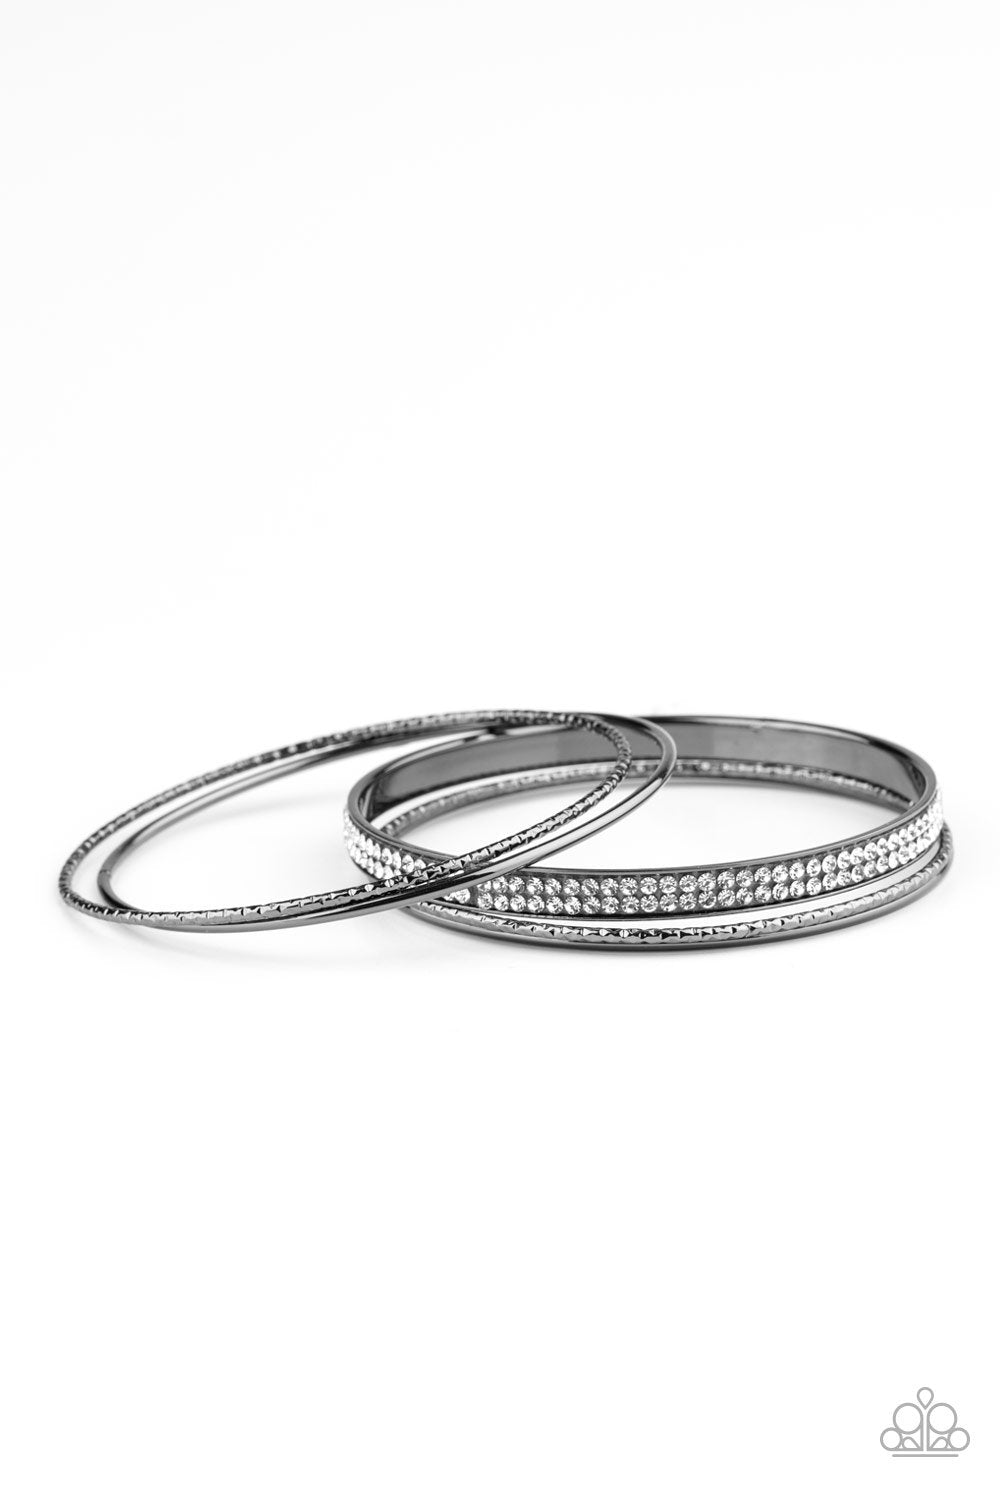 Heap It On Gunmetal Black and White Rhinestone Bangle Bracelet Set - Paparazzi Accessories-CarasShop.com - $5 Jewelry by Cara Jewels